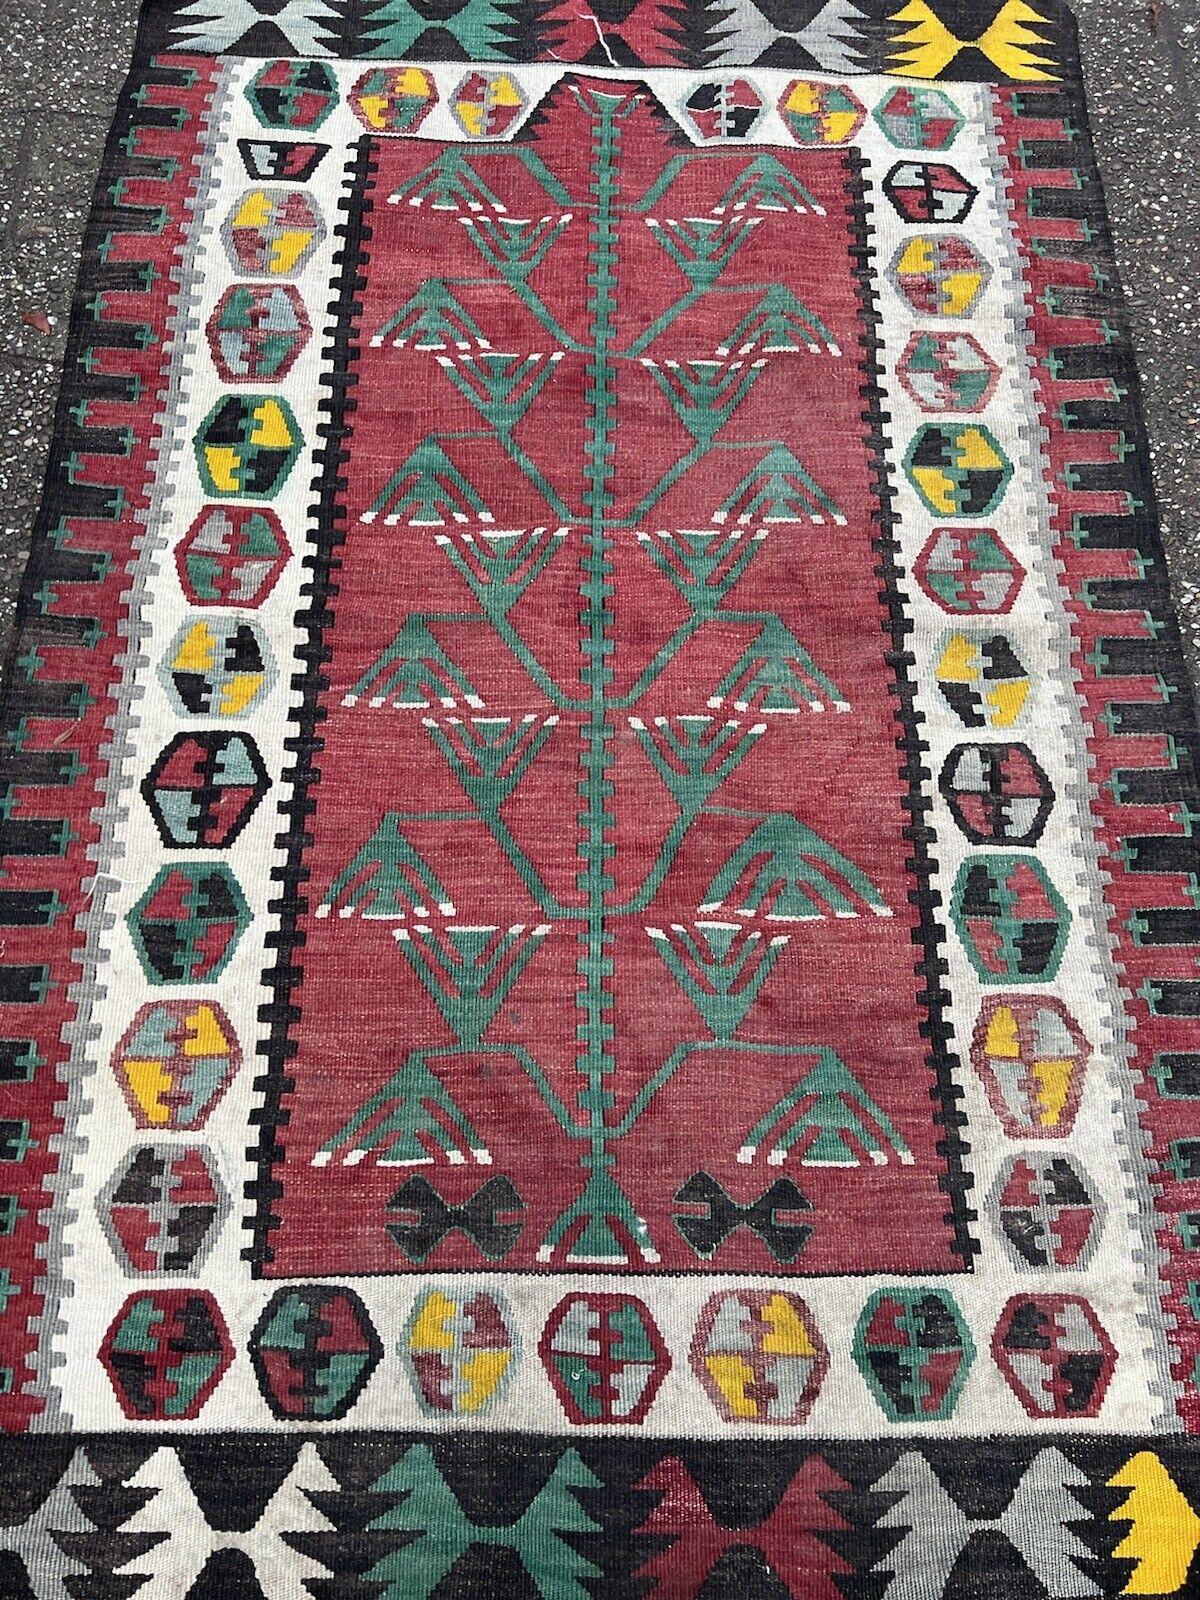 Late 20th Century Handmade Vintage Turkish Anatolian Kilim Rug 3' x 4.7', 1970s - 1S62 For Sale